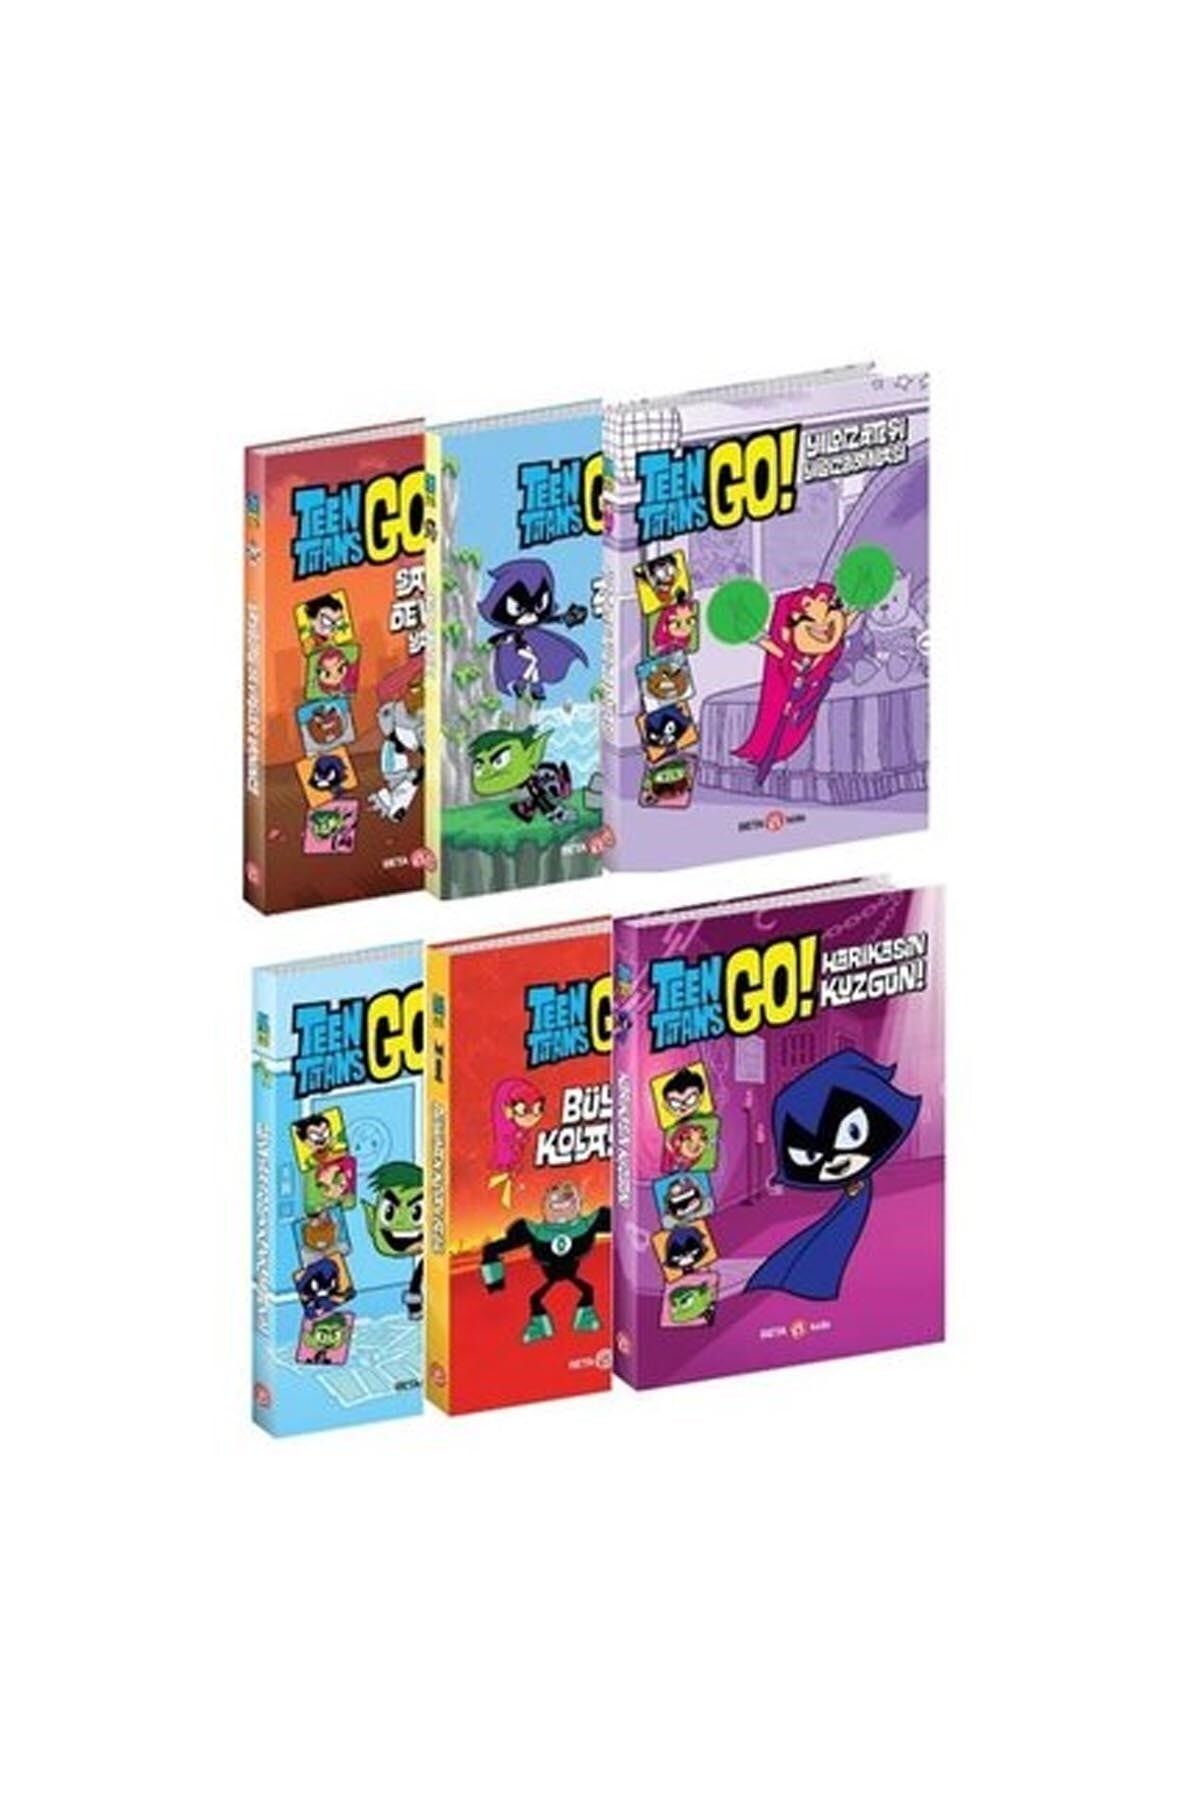 DİSNEY Dc Comics: Teen Titans Go! Macera Seti 6 Kitap